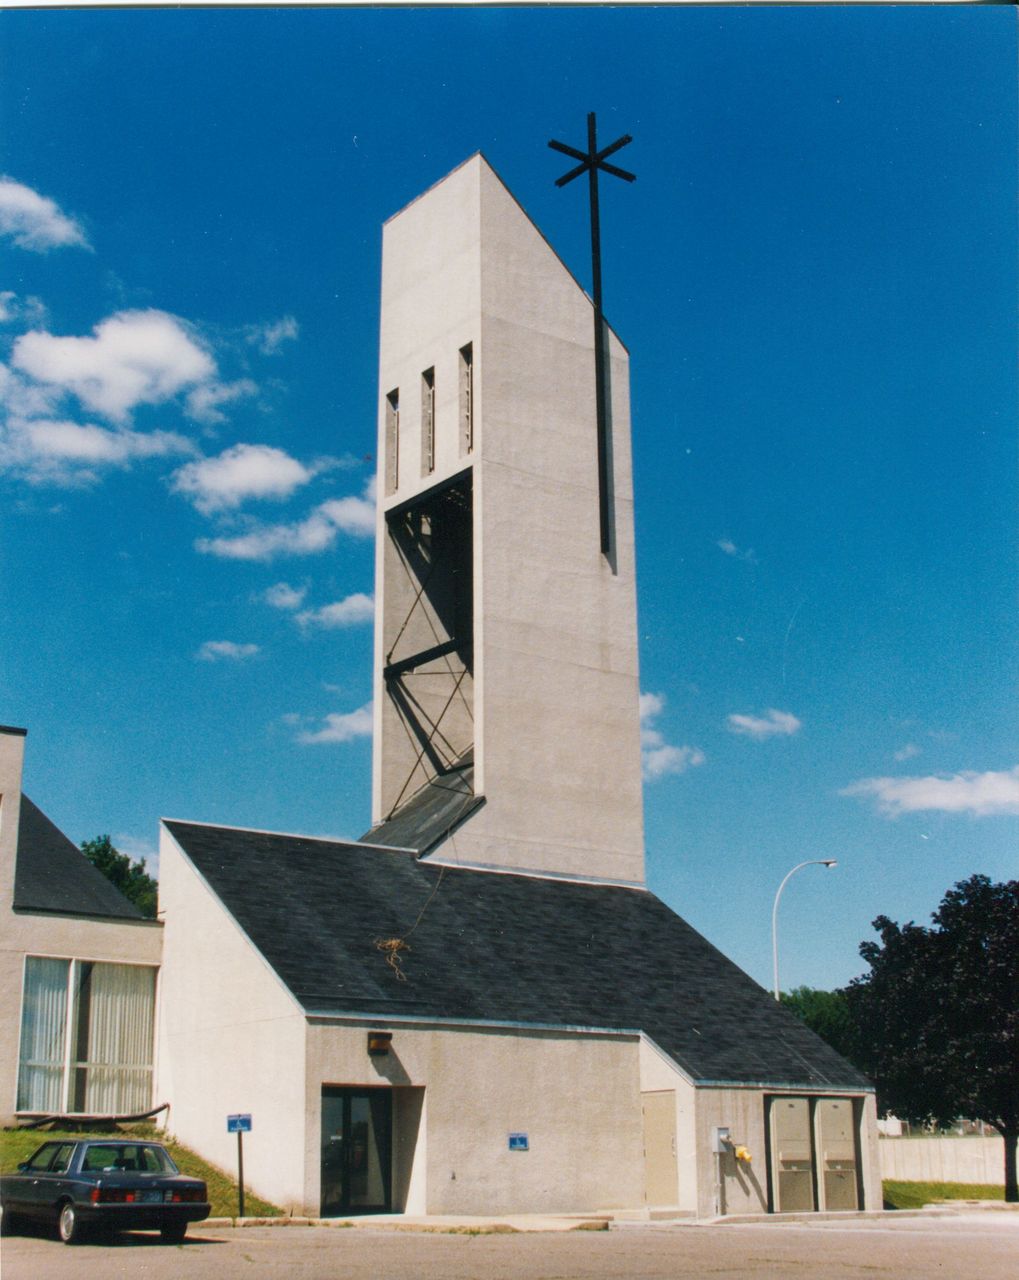 Church Towers